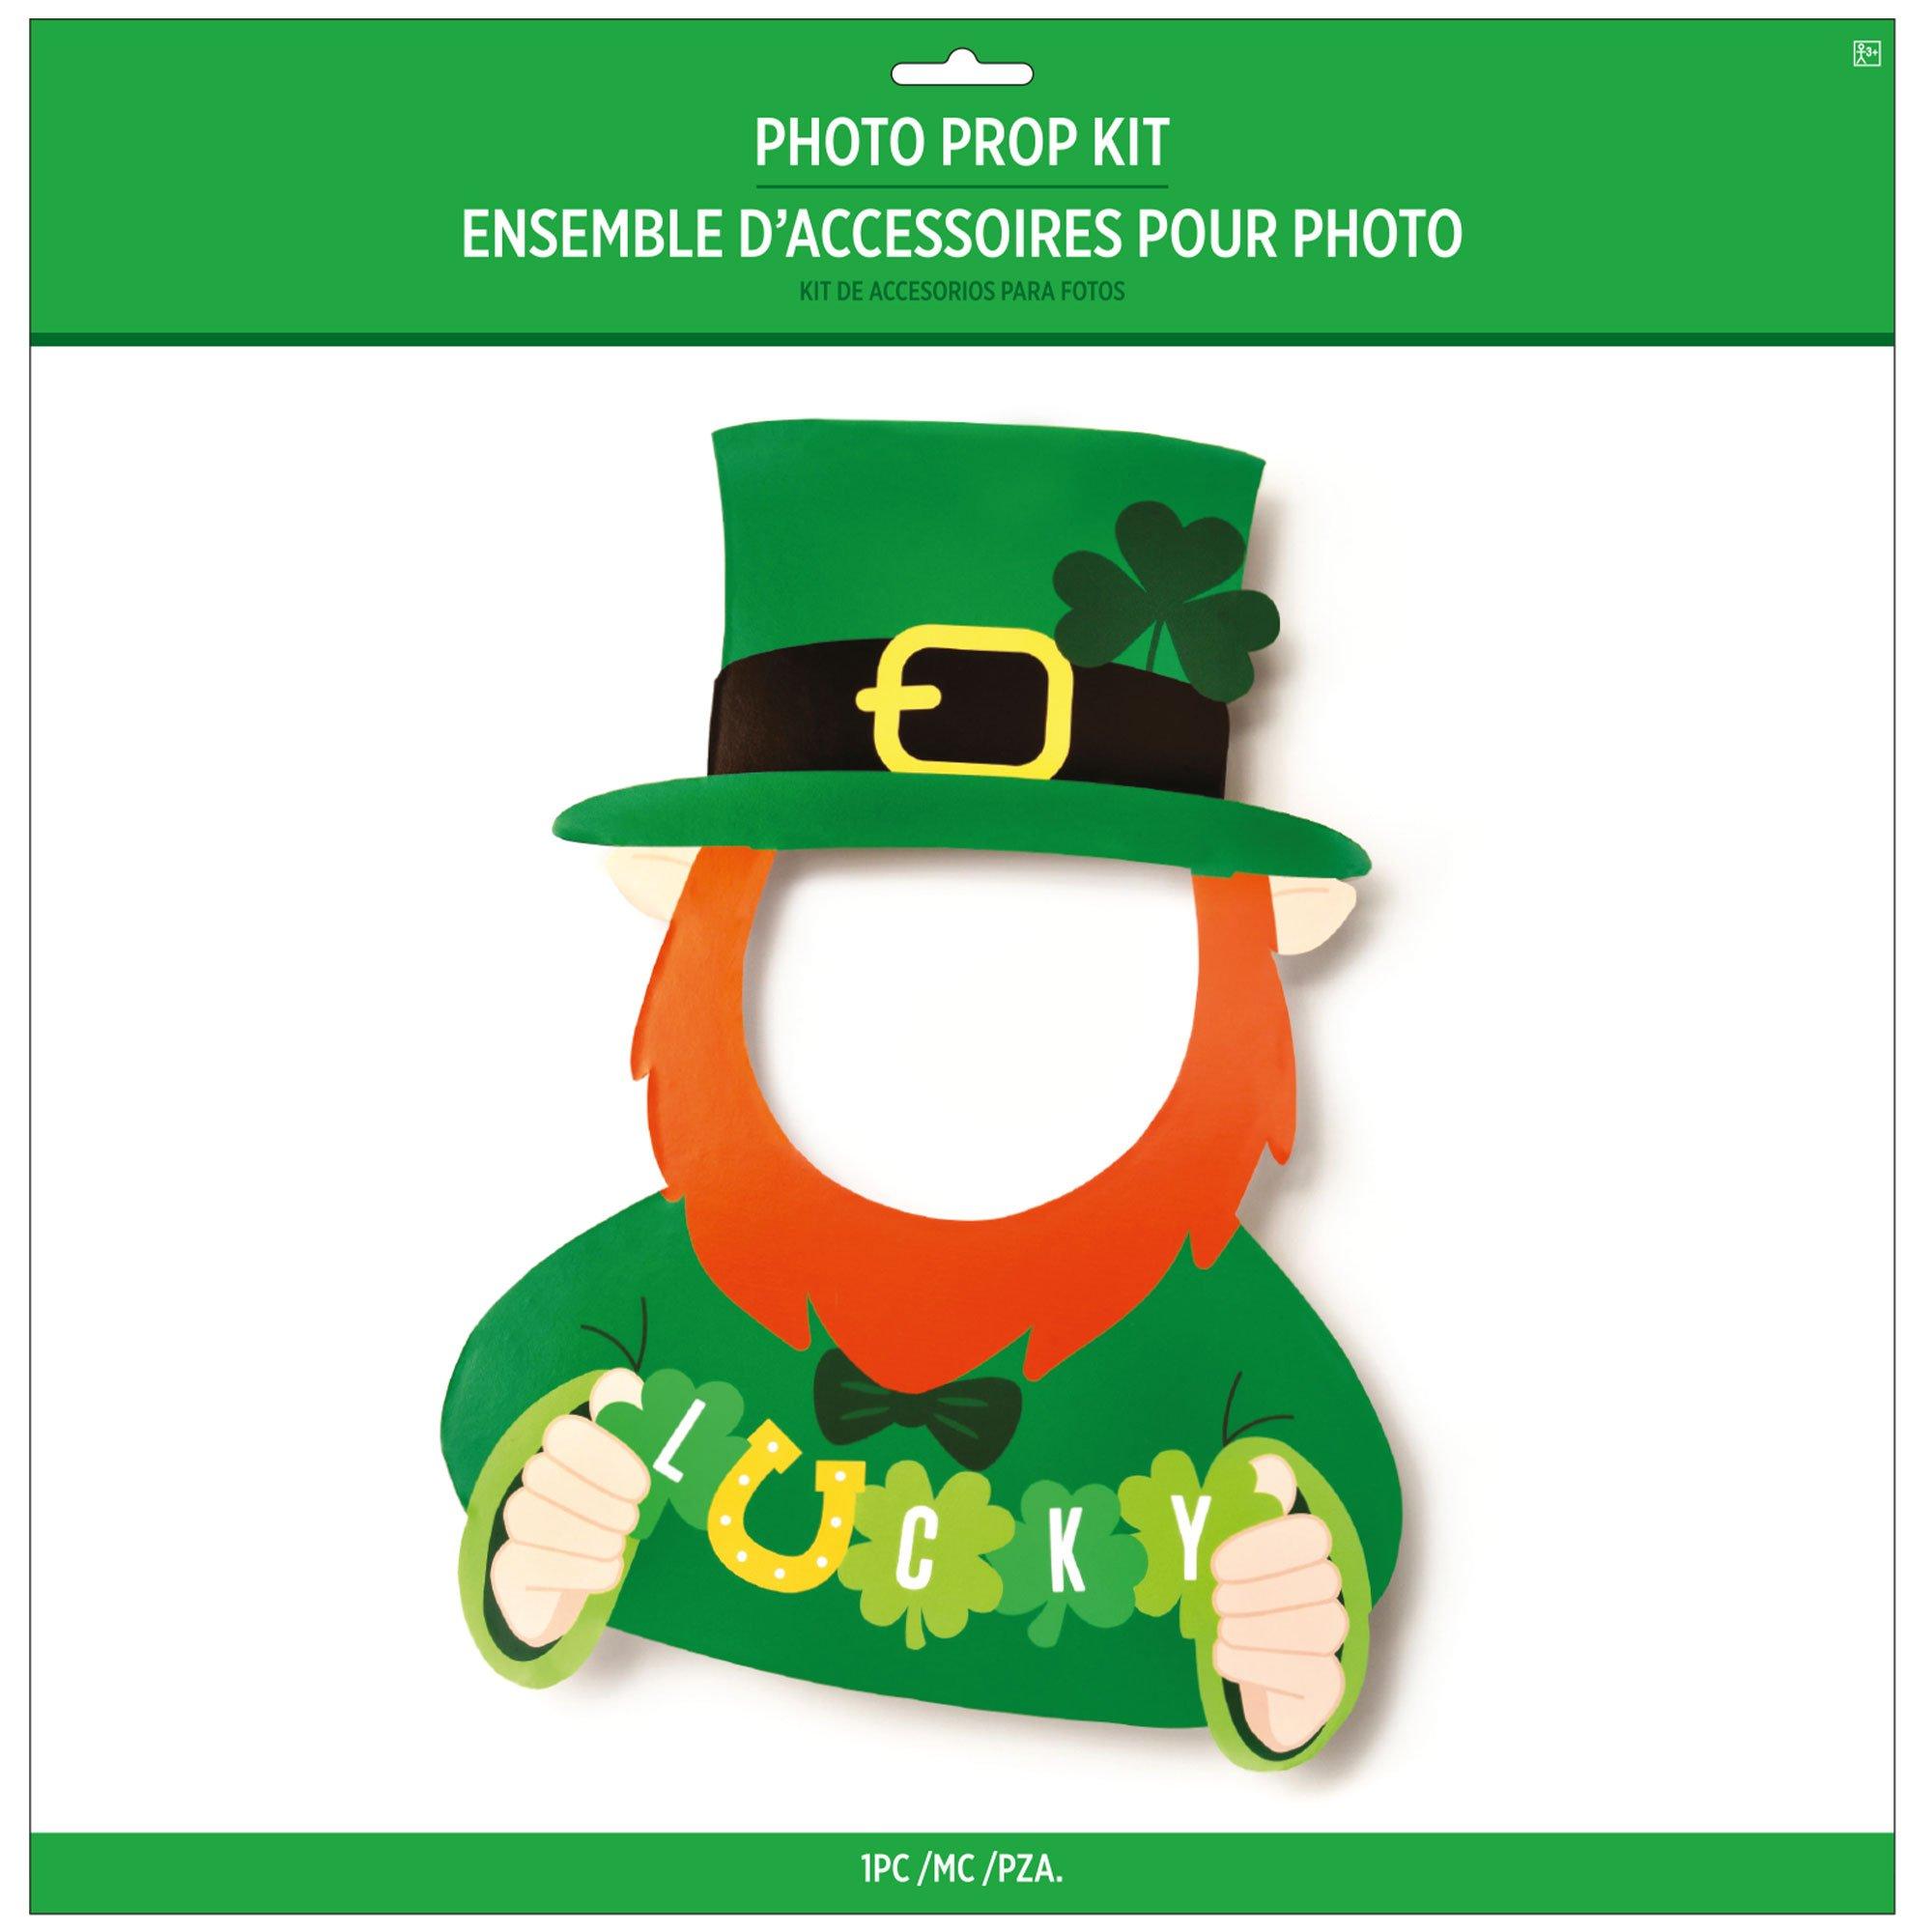 St. Patrick's Day Leprechaun Cutout Photo Prop